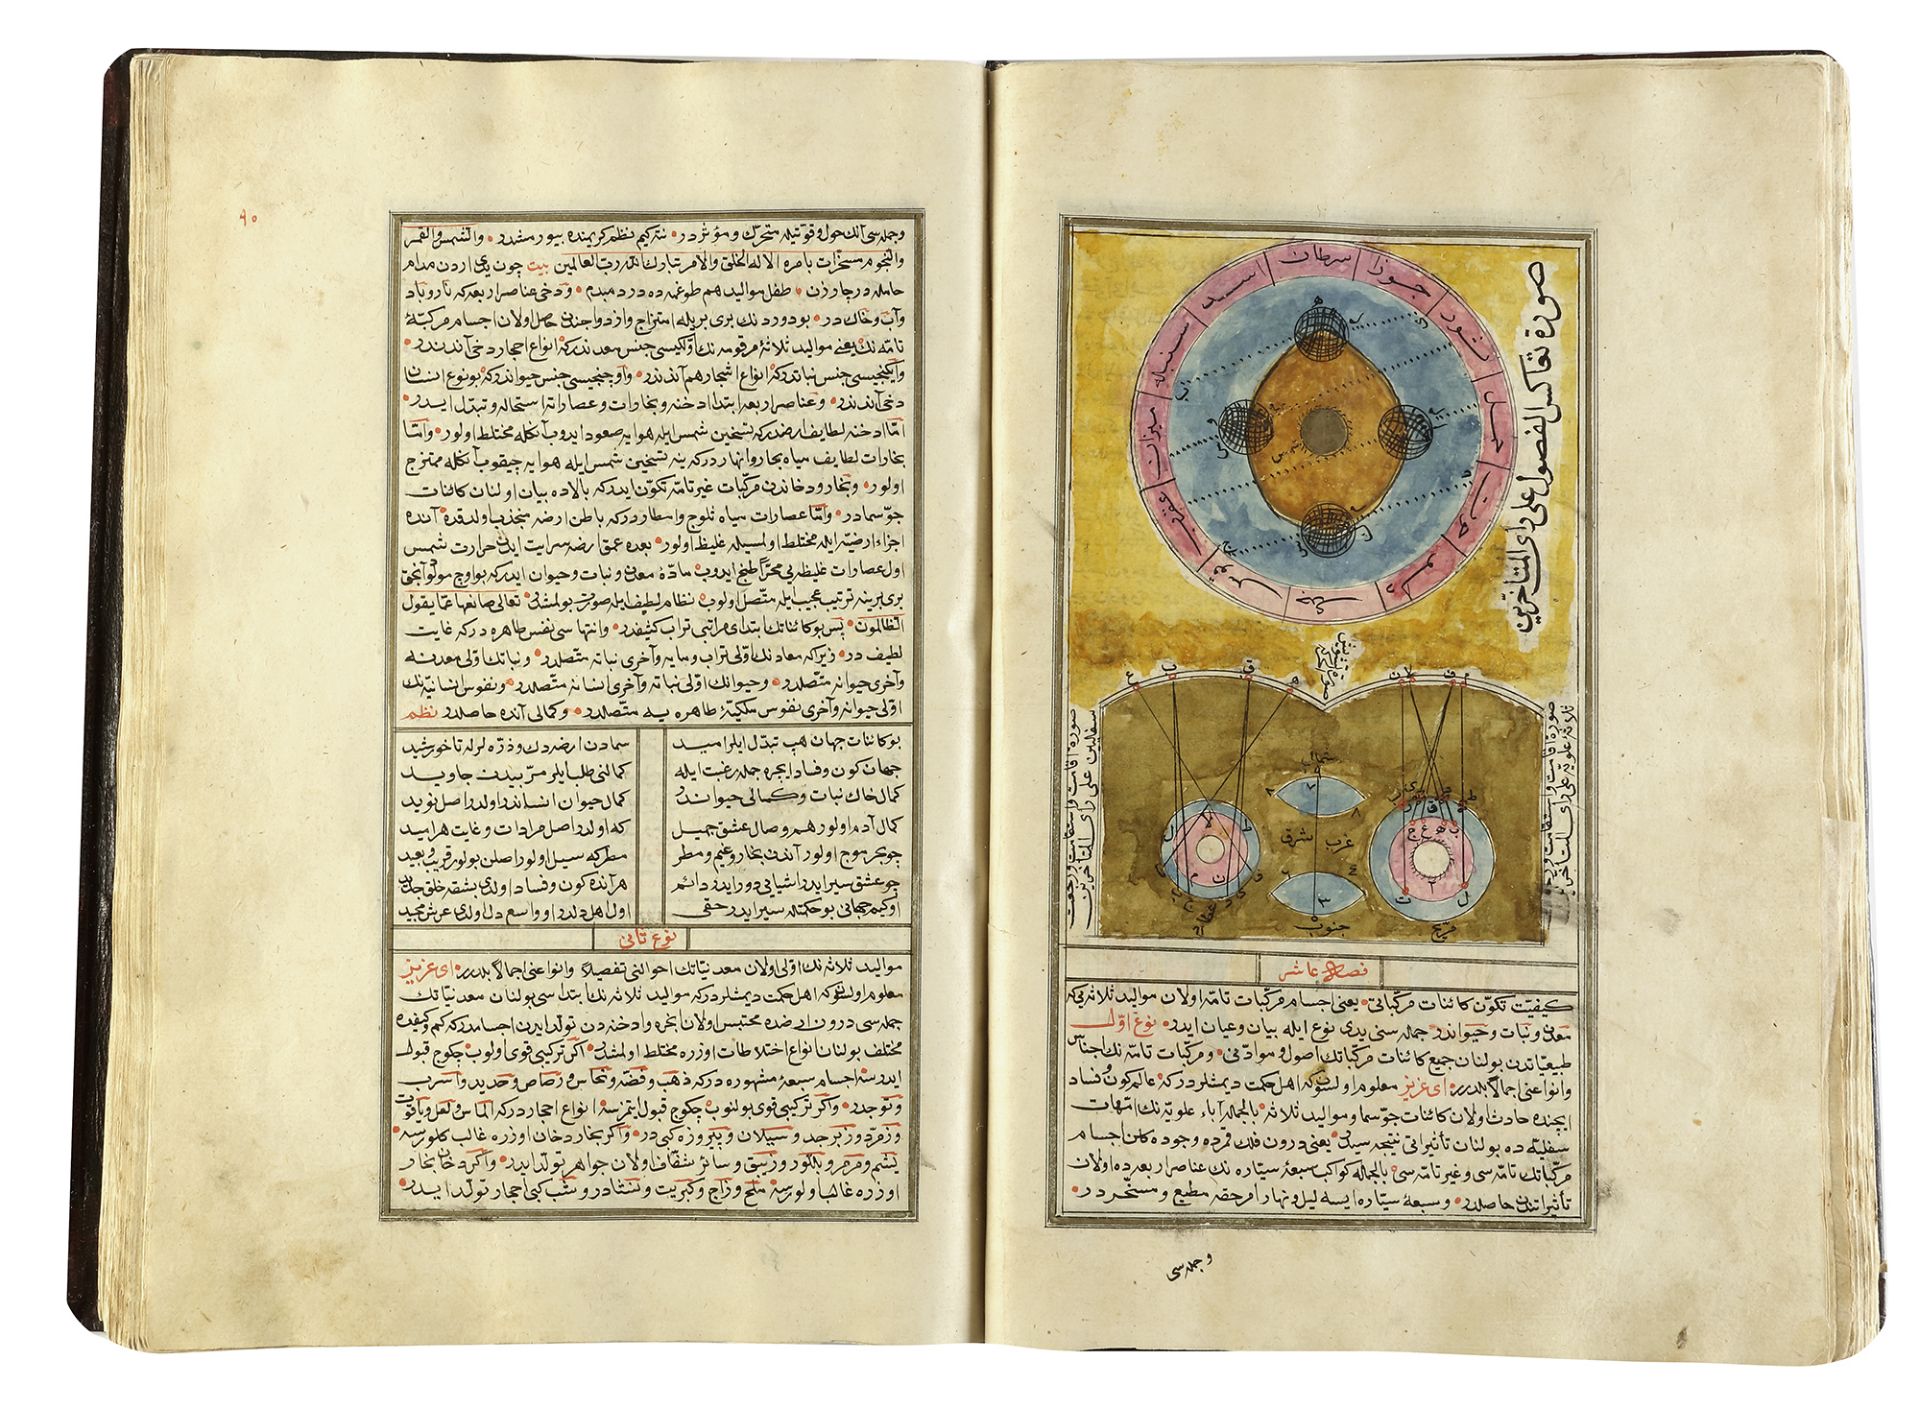 MARIFETNAME, IBRAHIM HAKKI, COPIED BY SAE'D ALLAH BIN ALI BIN AHMED, TURKEY, 1221 AH/1806 AD - Image 49 of 58